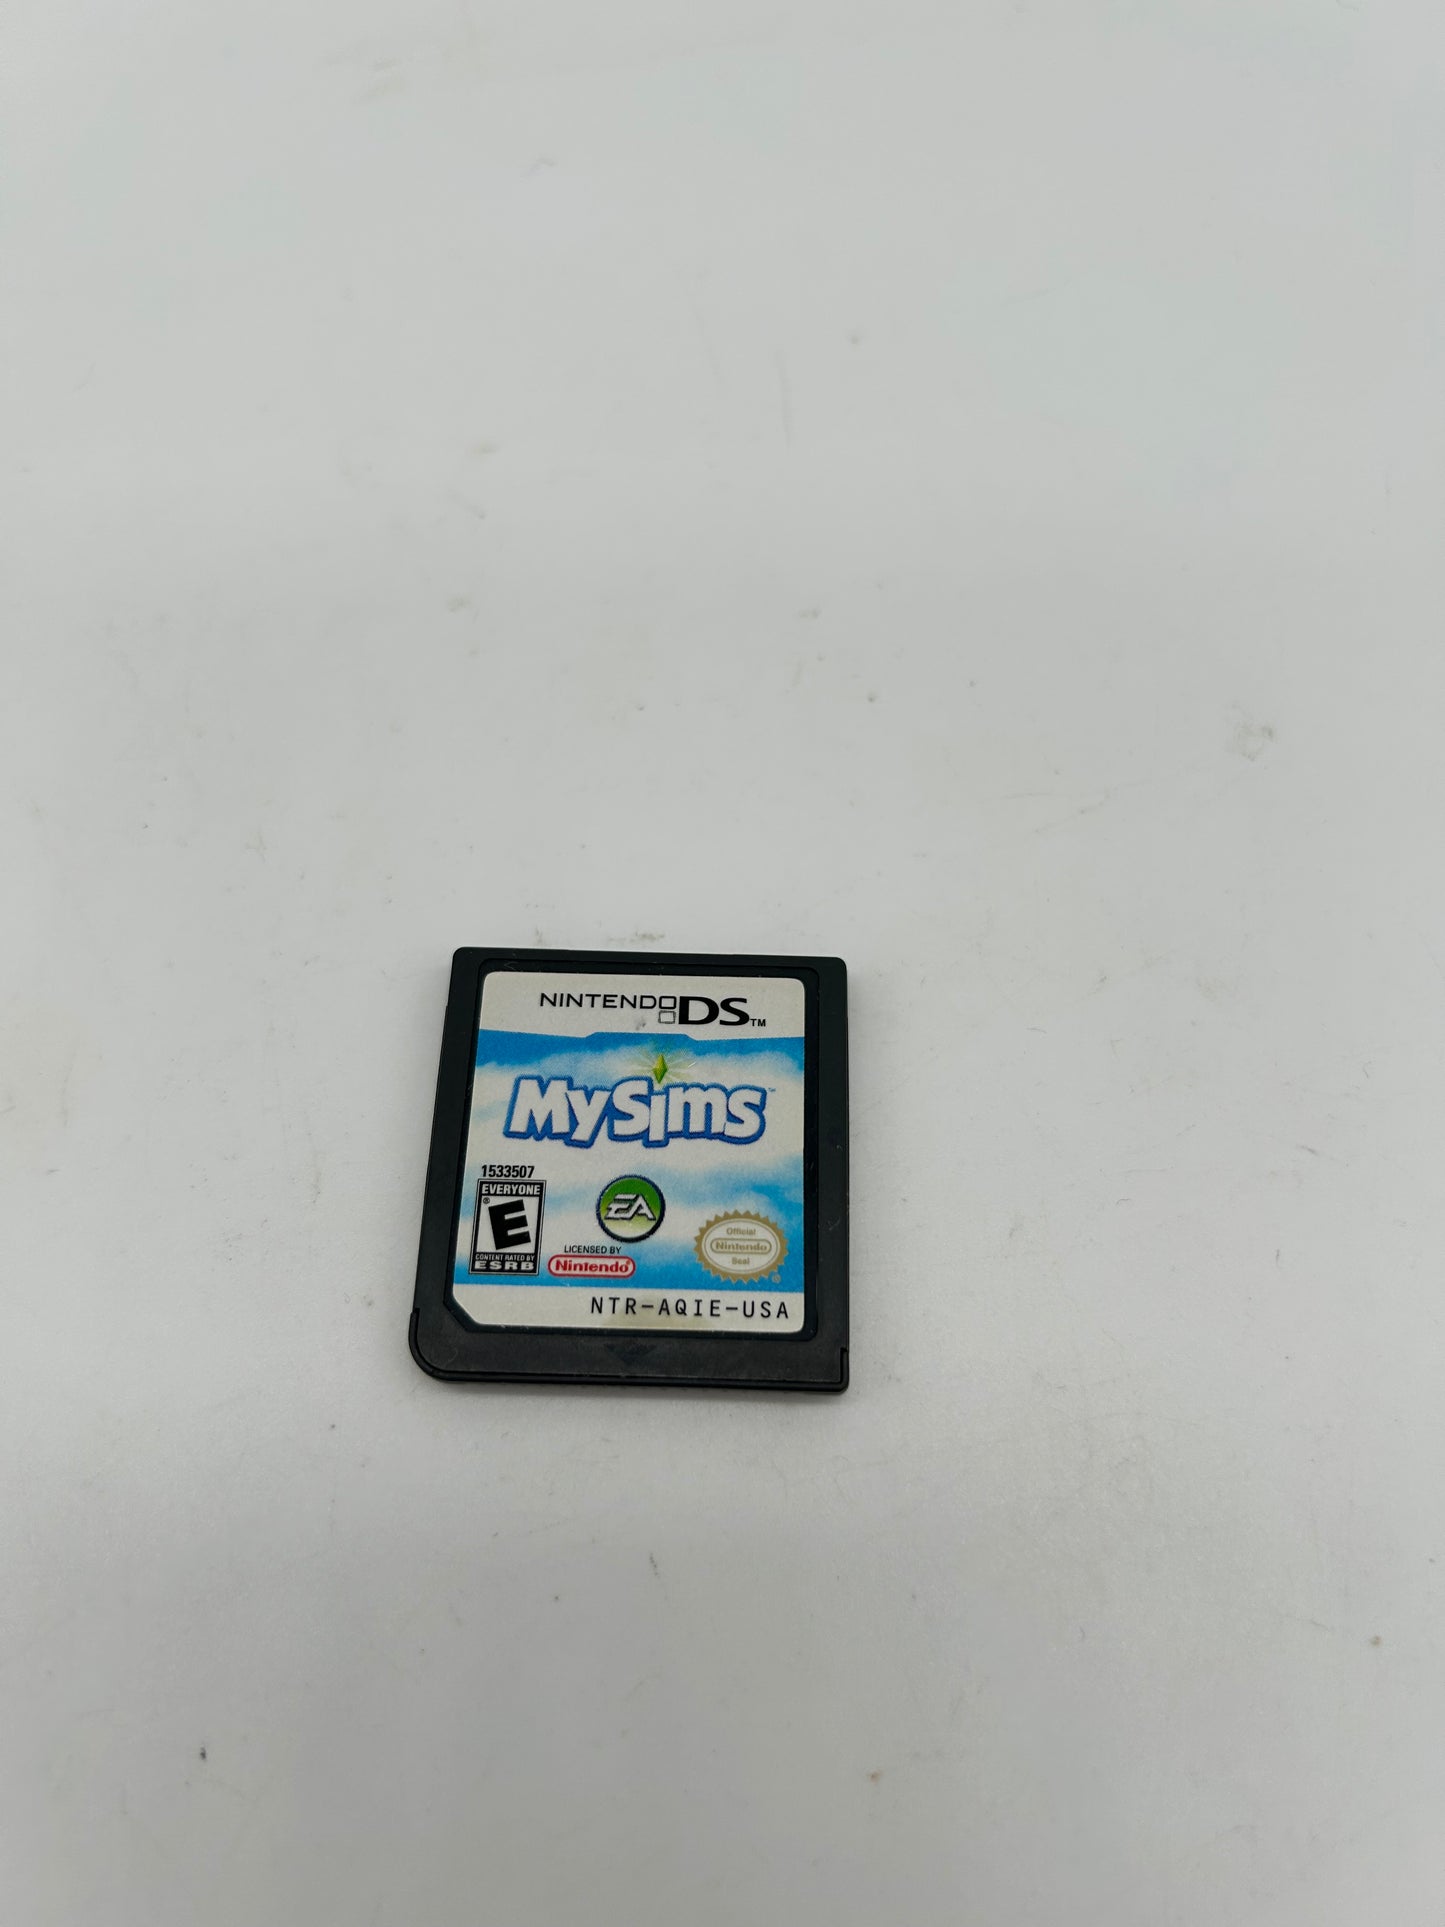 PiXEL-RETRO.COM : NINTENDO DS (DS) THE MY SIMS NTSC